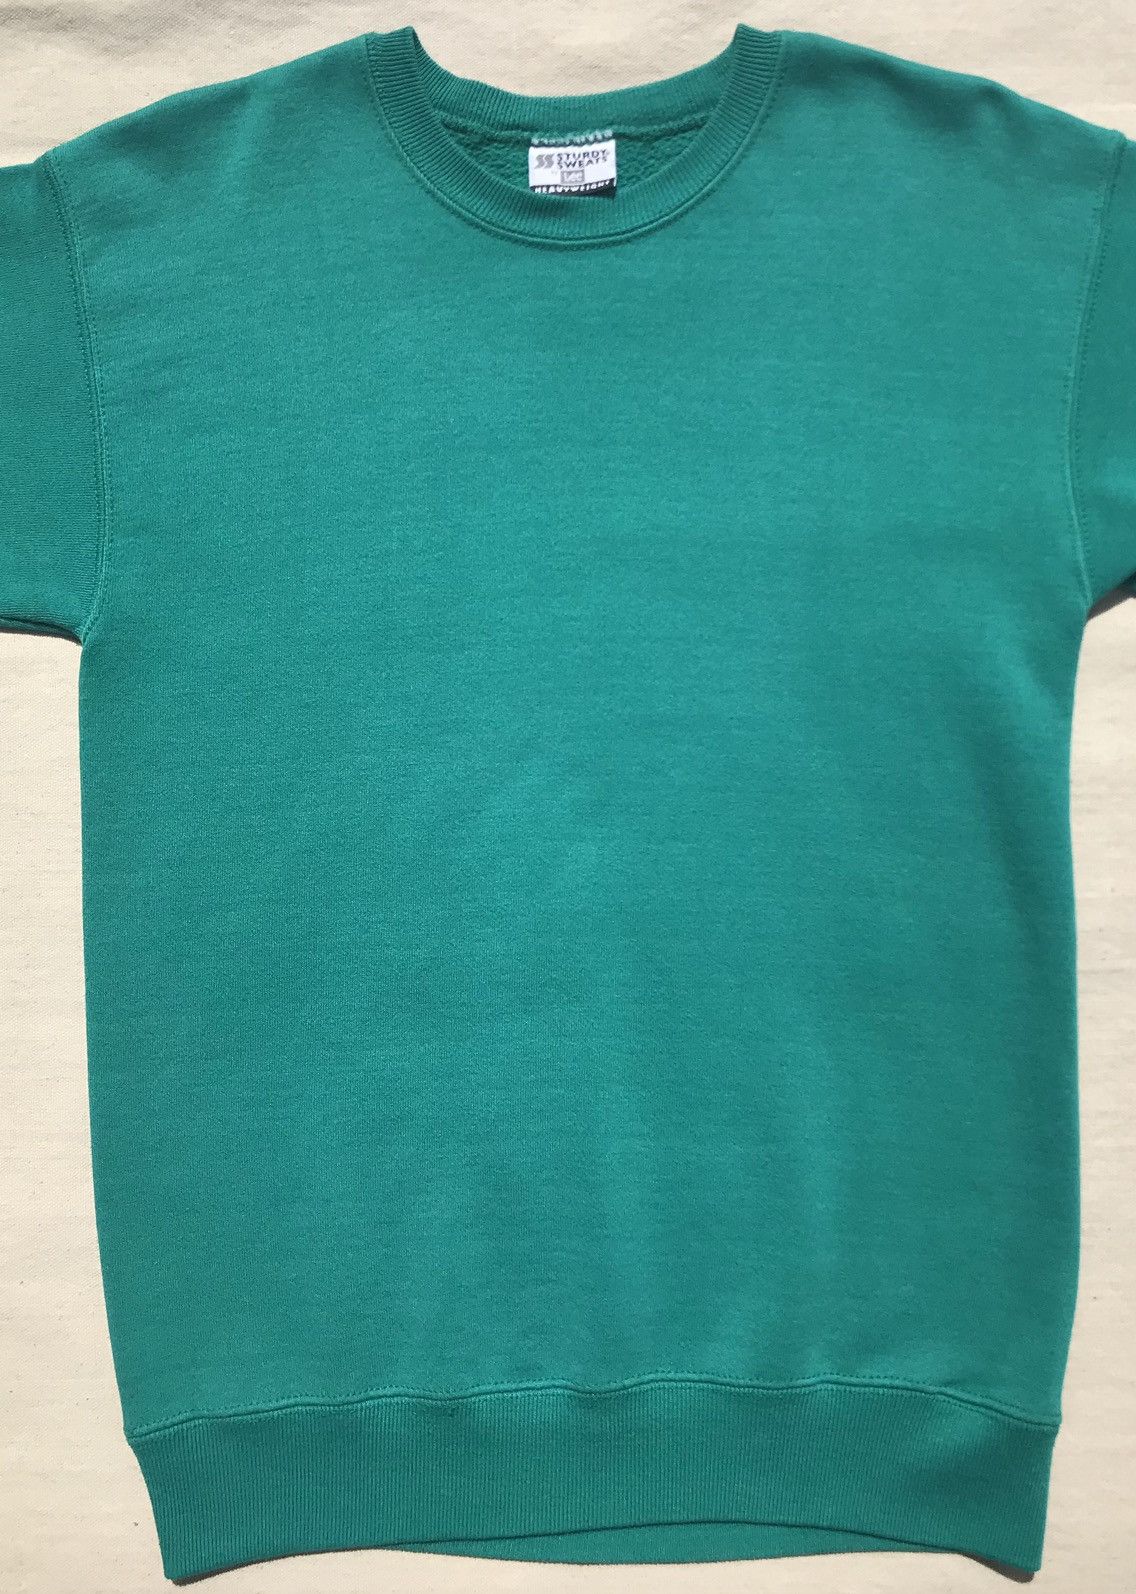 Lee VTG 90s Lee Heavyweight Turquoise Blank Sweatshirt Small Size US S / EU 44-46 / 1 - 3 Thumbnail